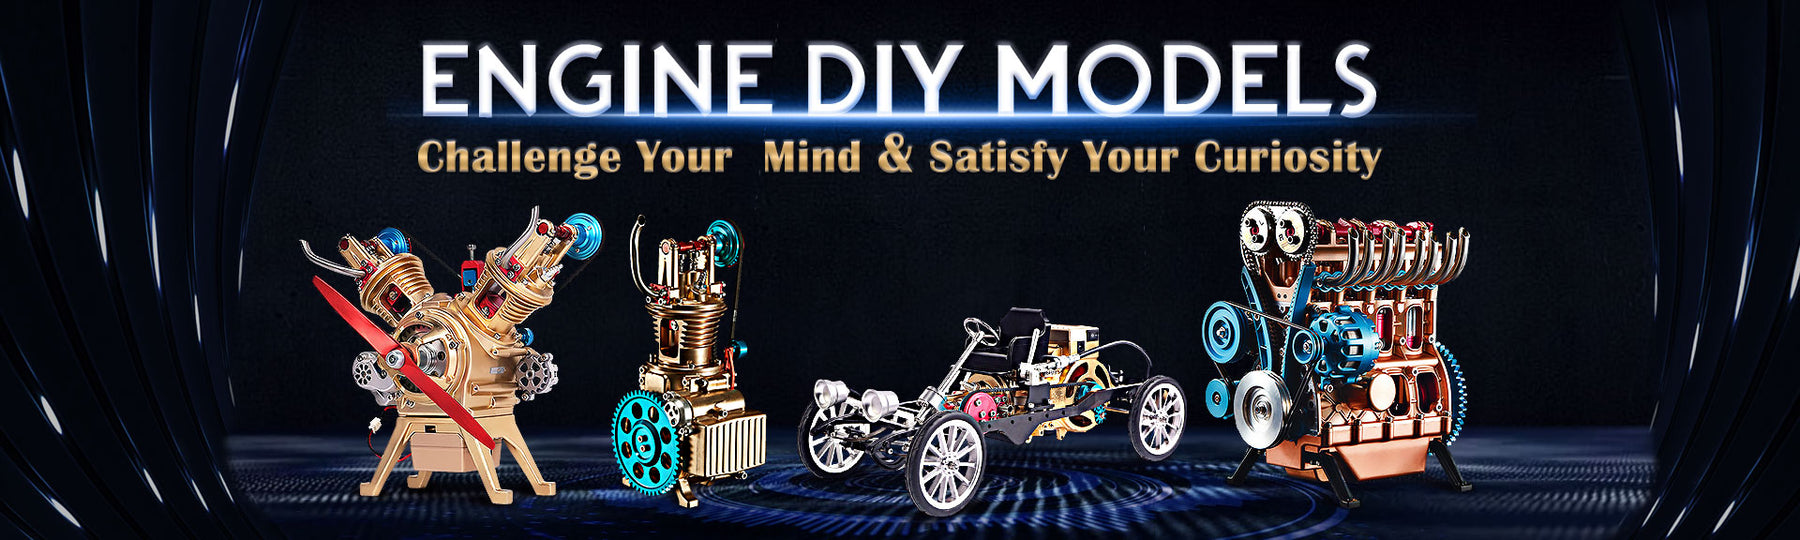 Enginediy.com | DIY Your Own Engine Model | Best Seller